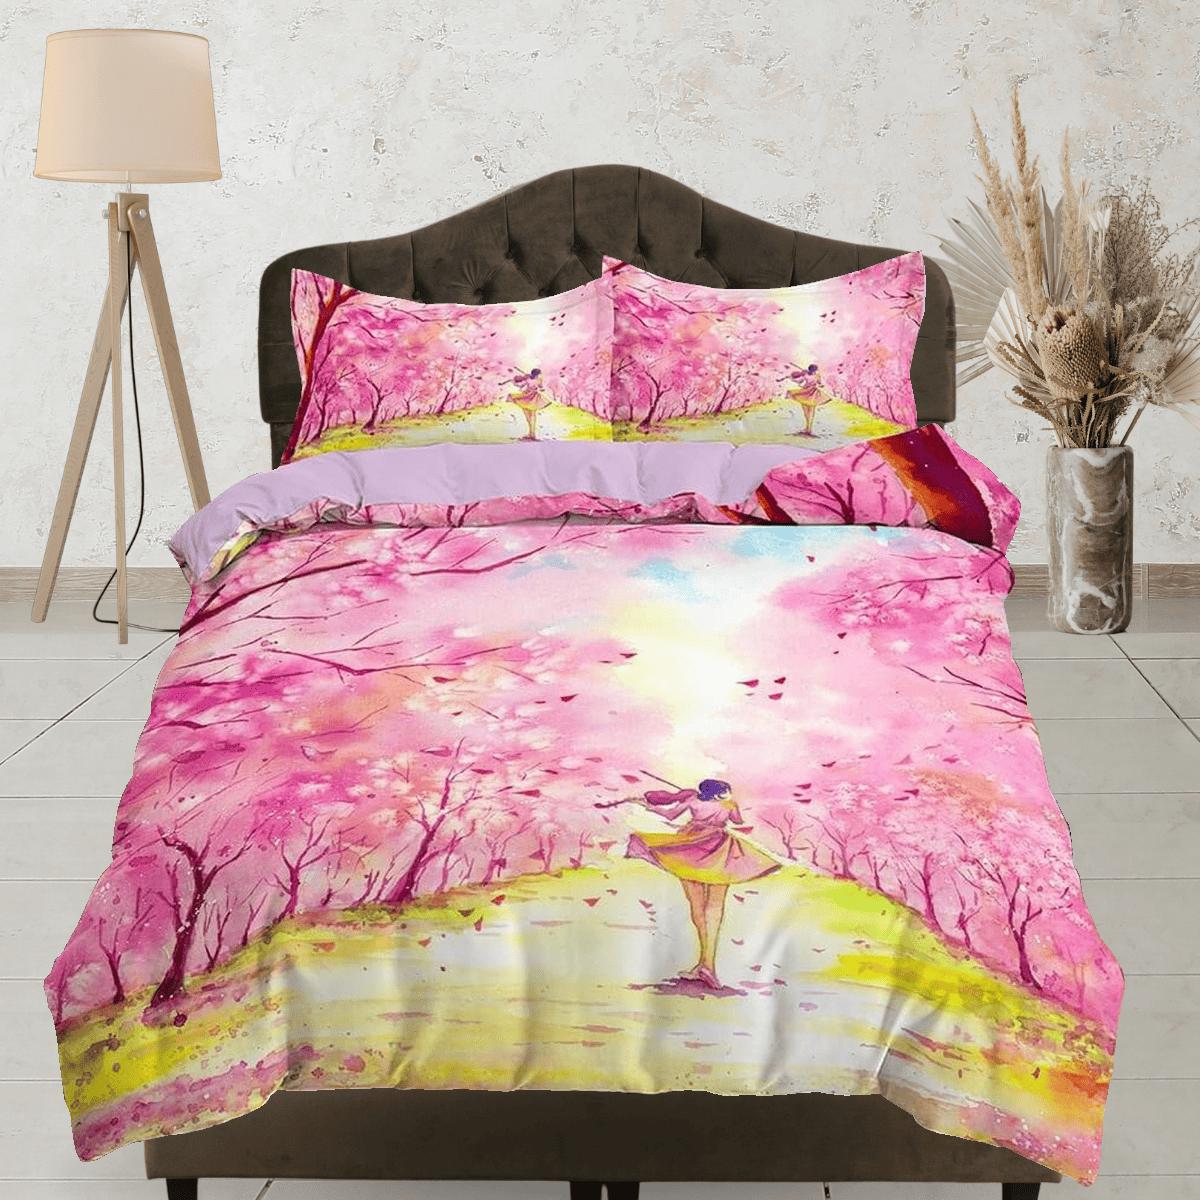 daintyduvet Pink cherry blossom bedding floral prints duvet cover queen, king, boho bedding designer bedspread artistic full size bedding aesthetic